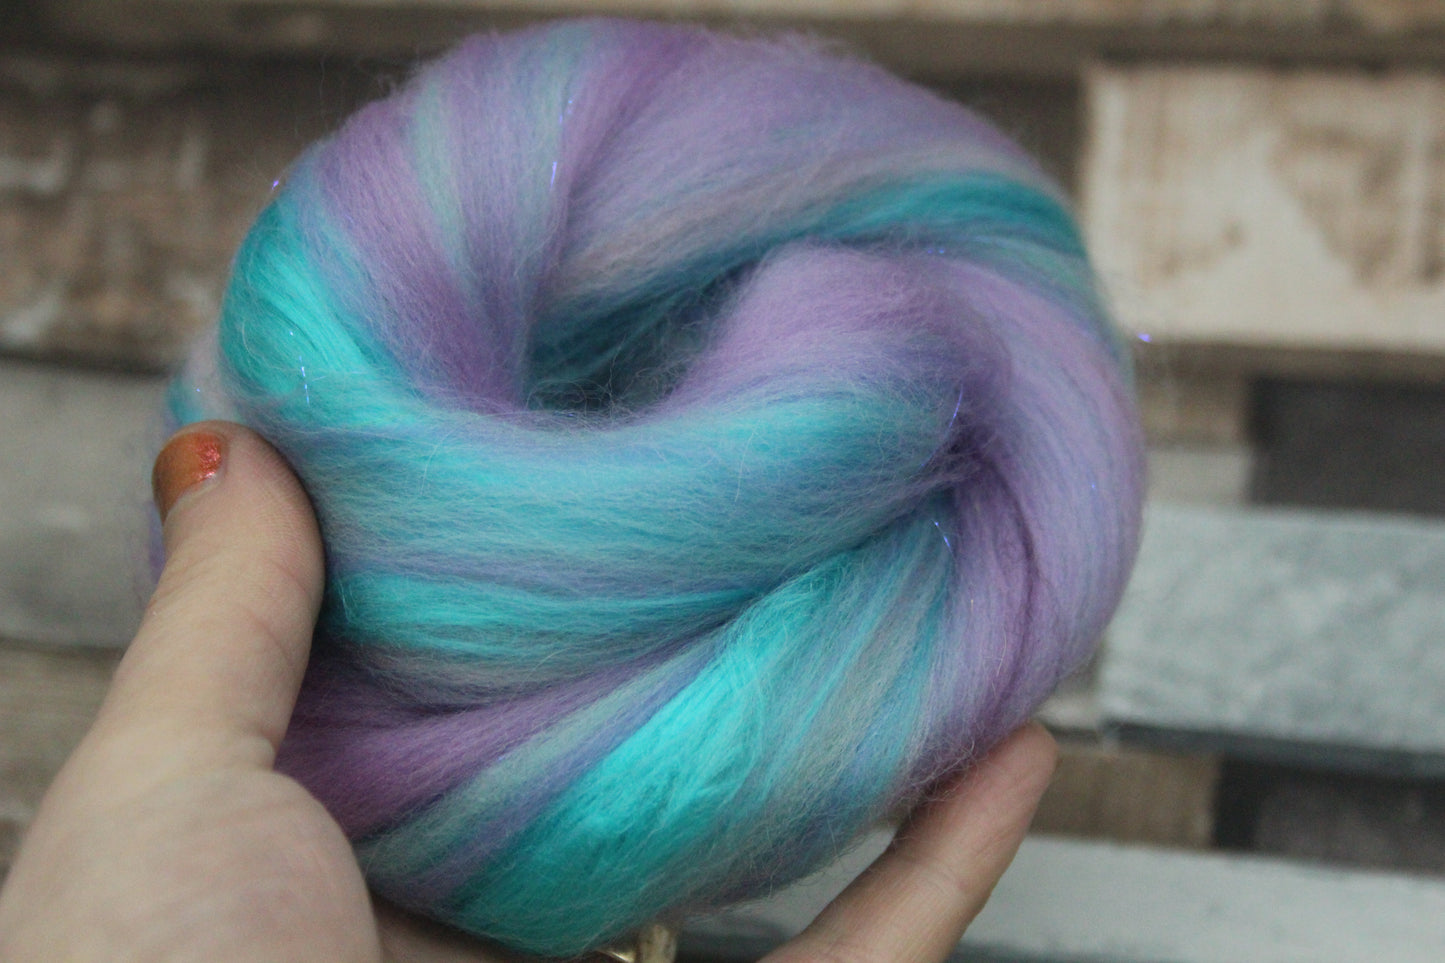 Merino Wool Blend - Purple Blue Pink - 12 grams / 0.4 oz  - Fibre for felting, weaving or spinning